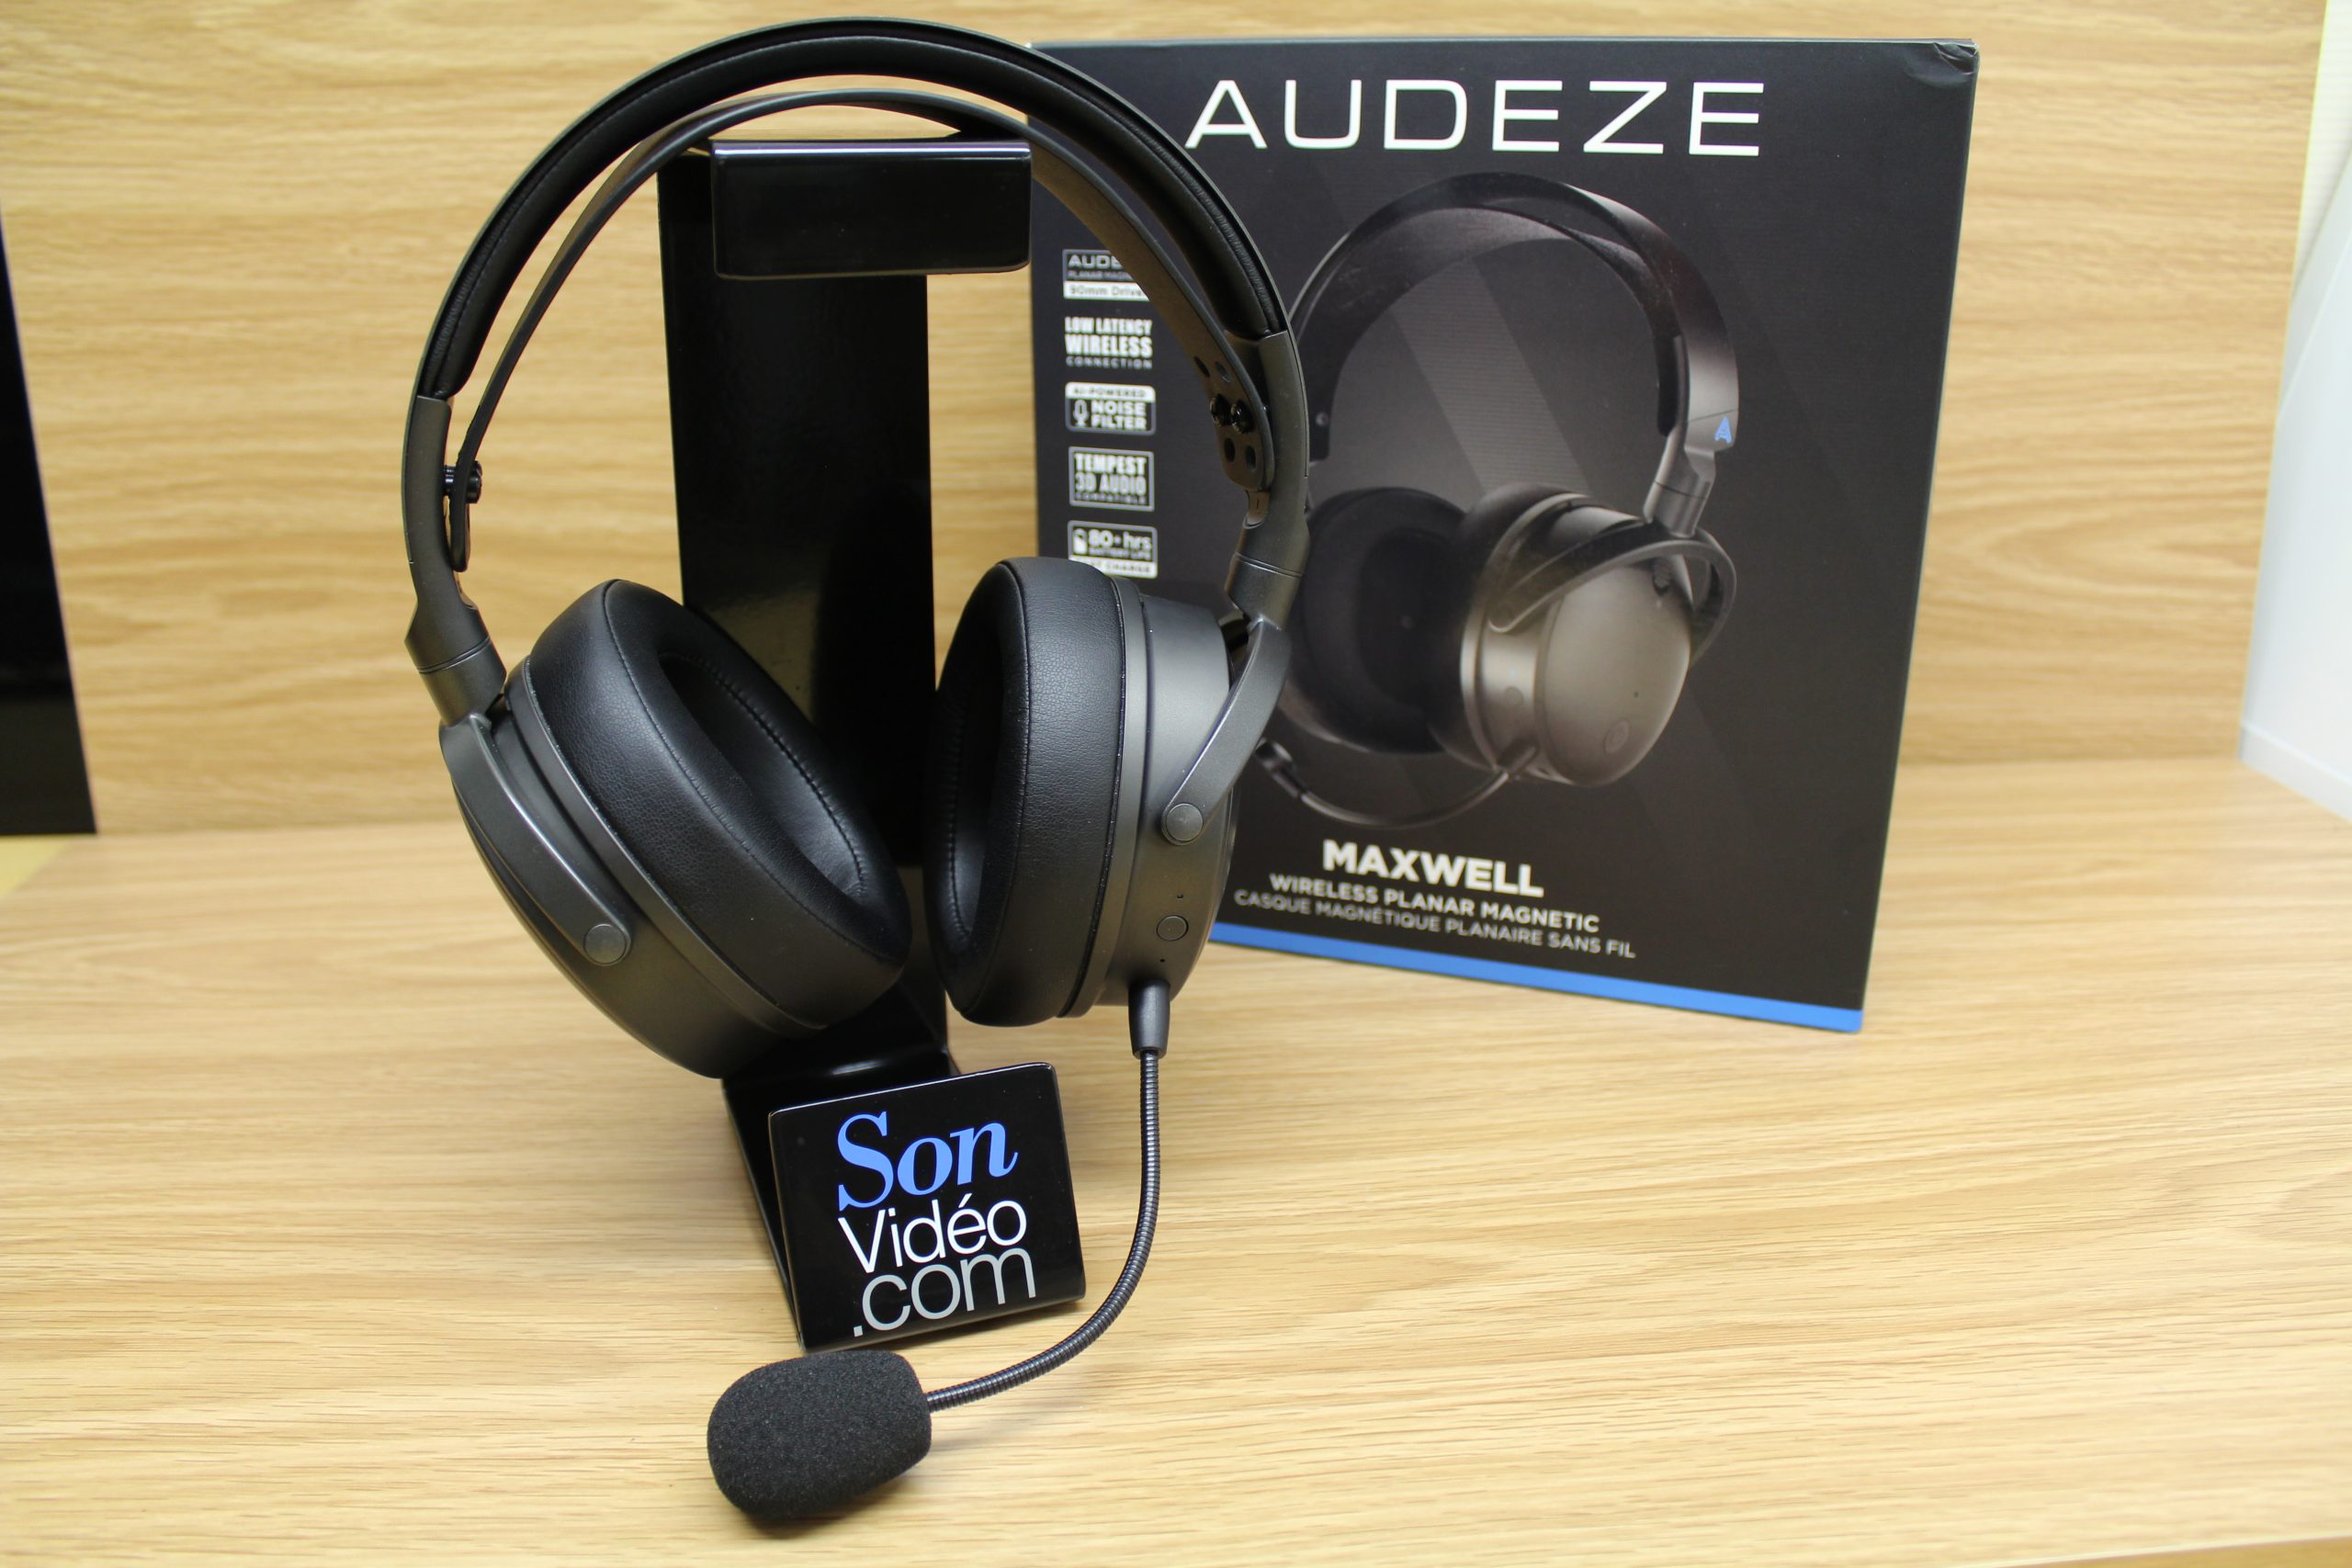 Audeze Maxwell: the ultimate gaming headphones? - Son-Vidéo.com: blog